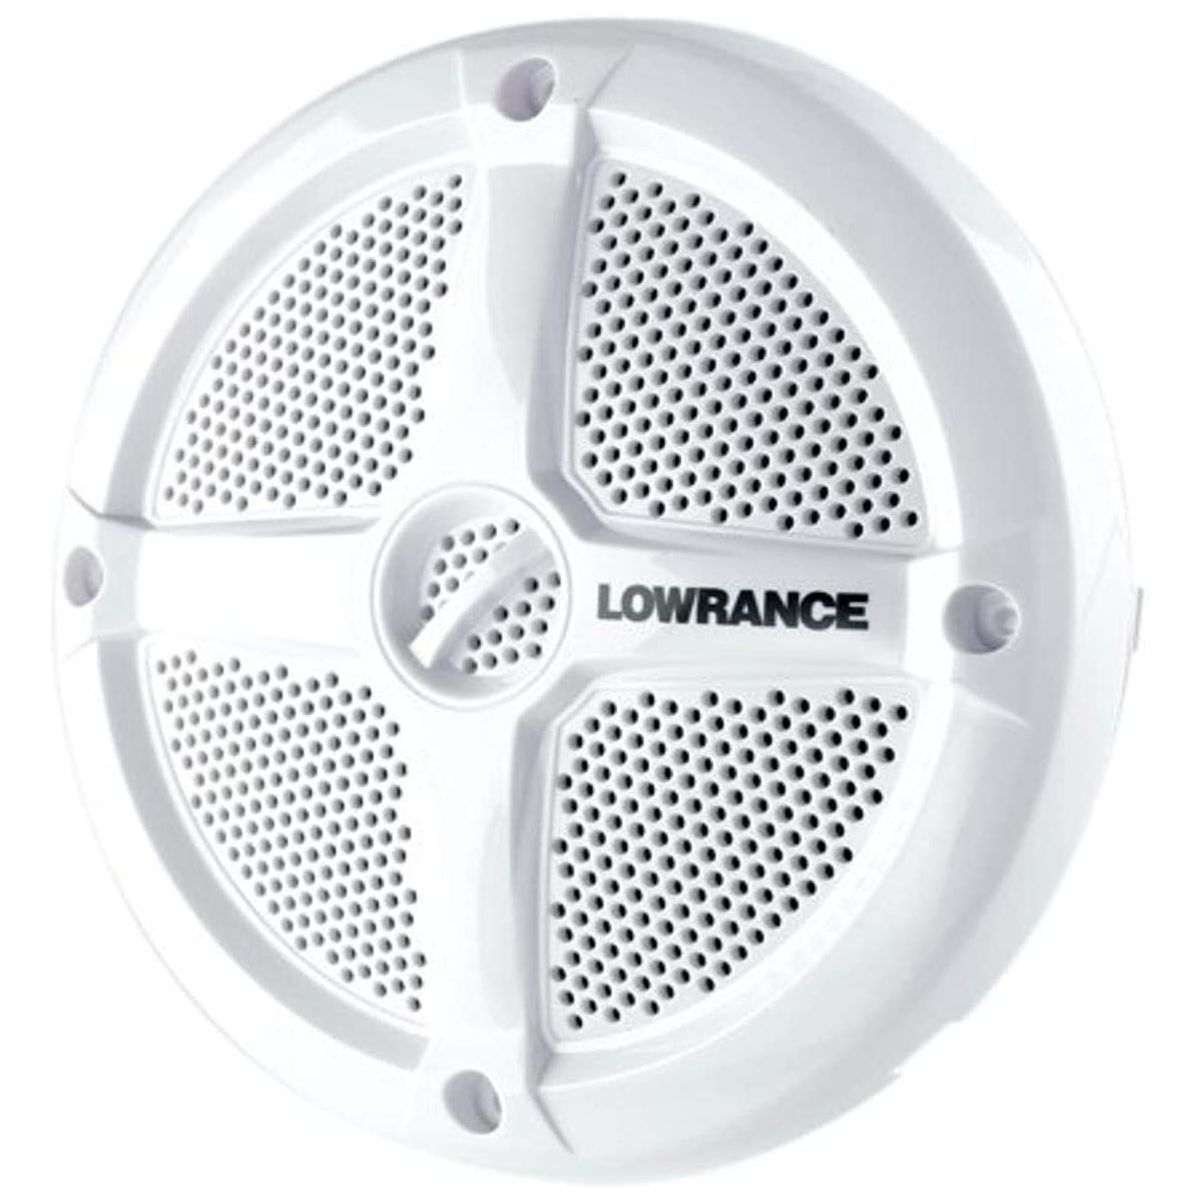 Lowrance marine zvučnici 6.5 inch, par